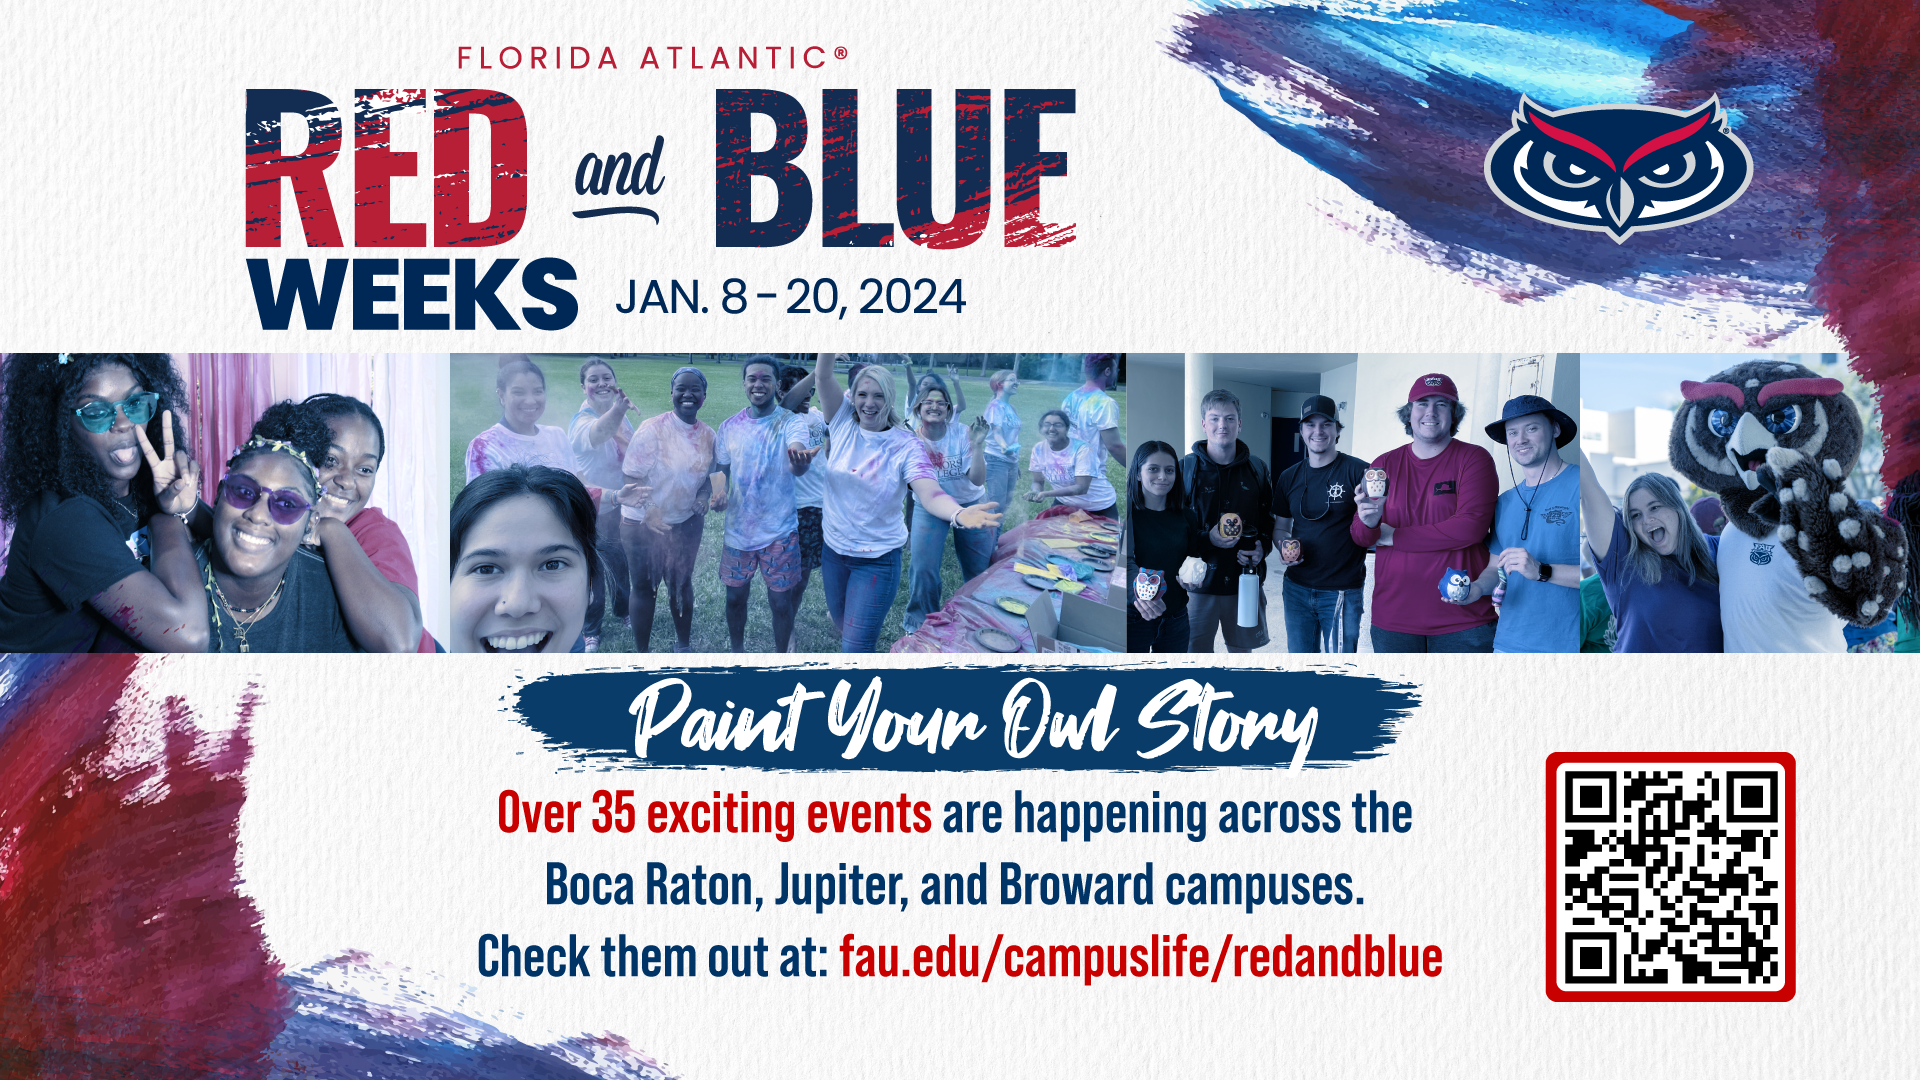 Red and Blue Weeks at Florida Atlantic